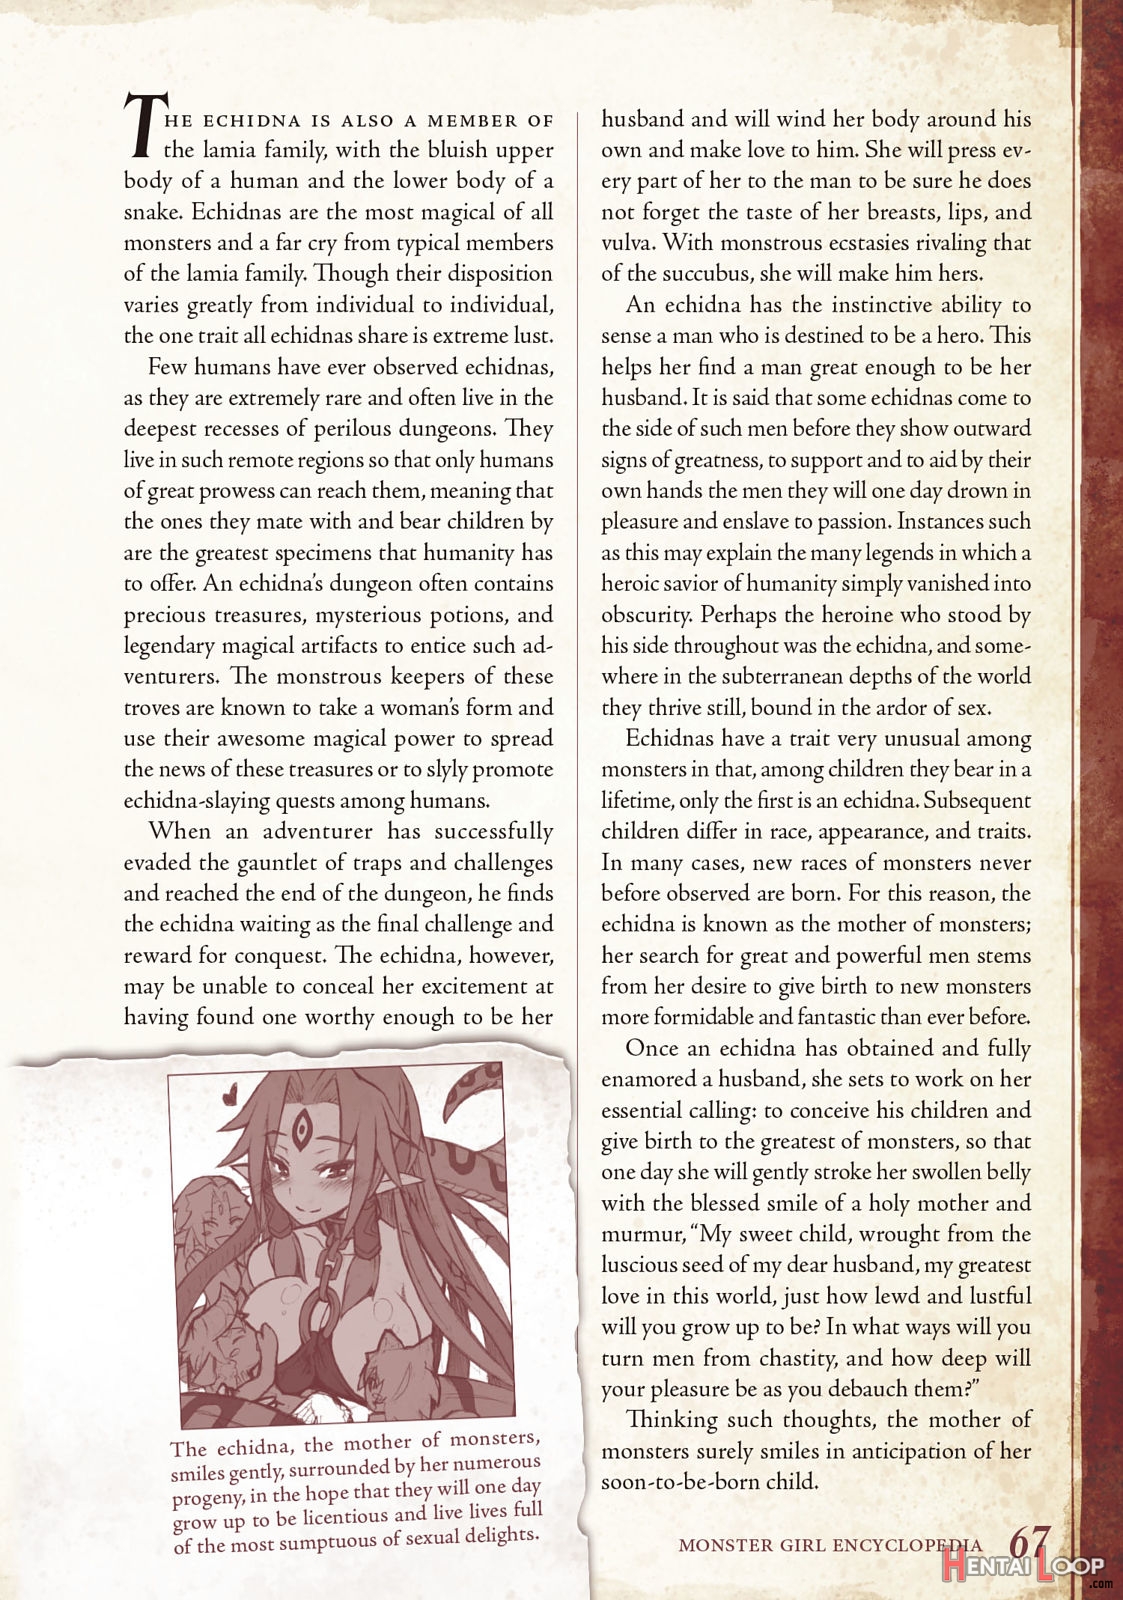 Monster Girl Encyclopedia Vol. 1 page 68